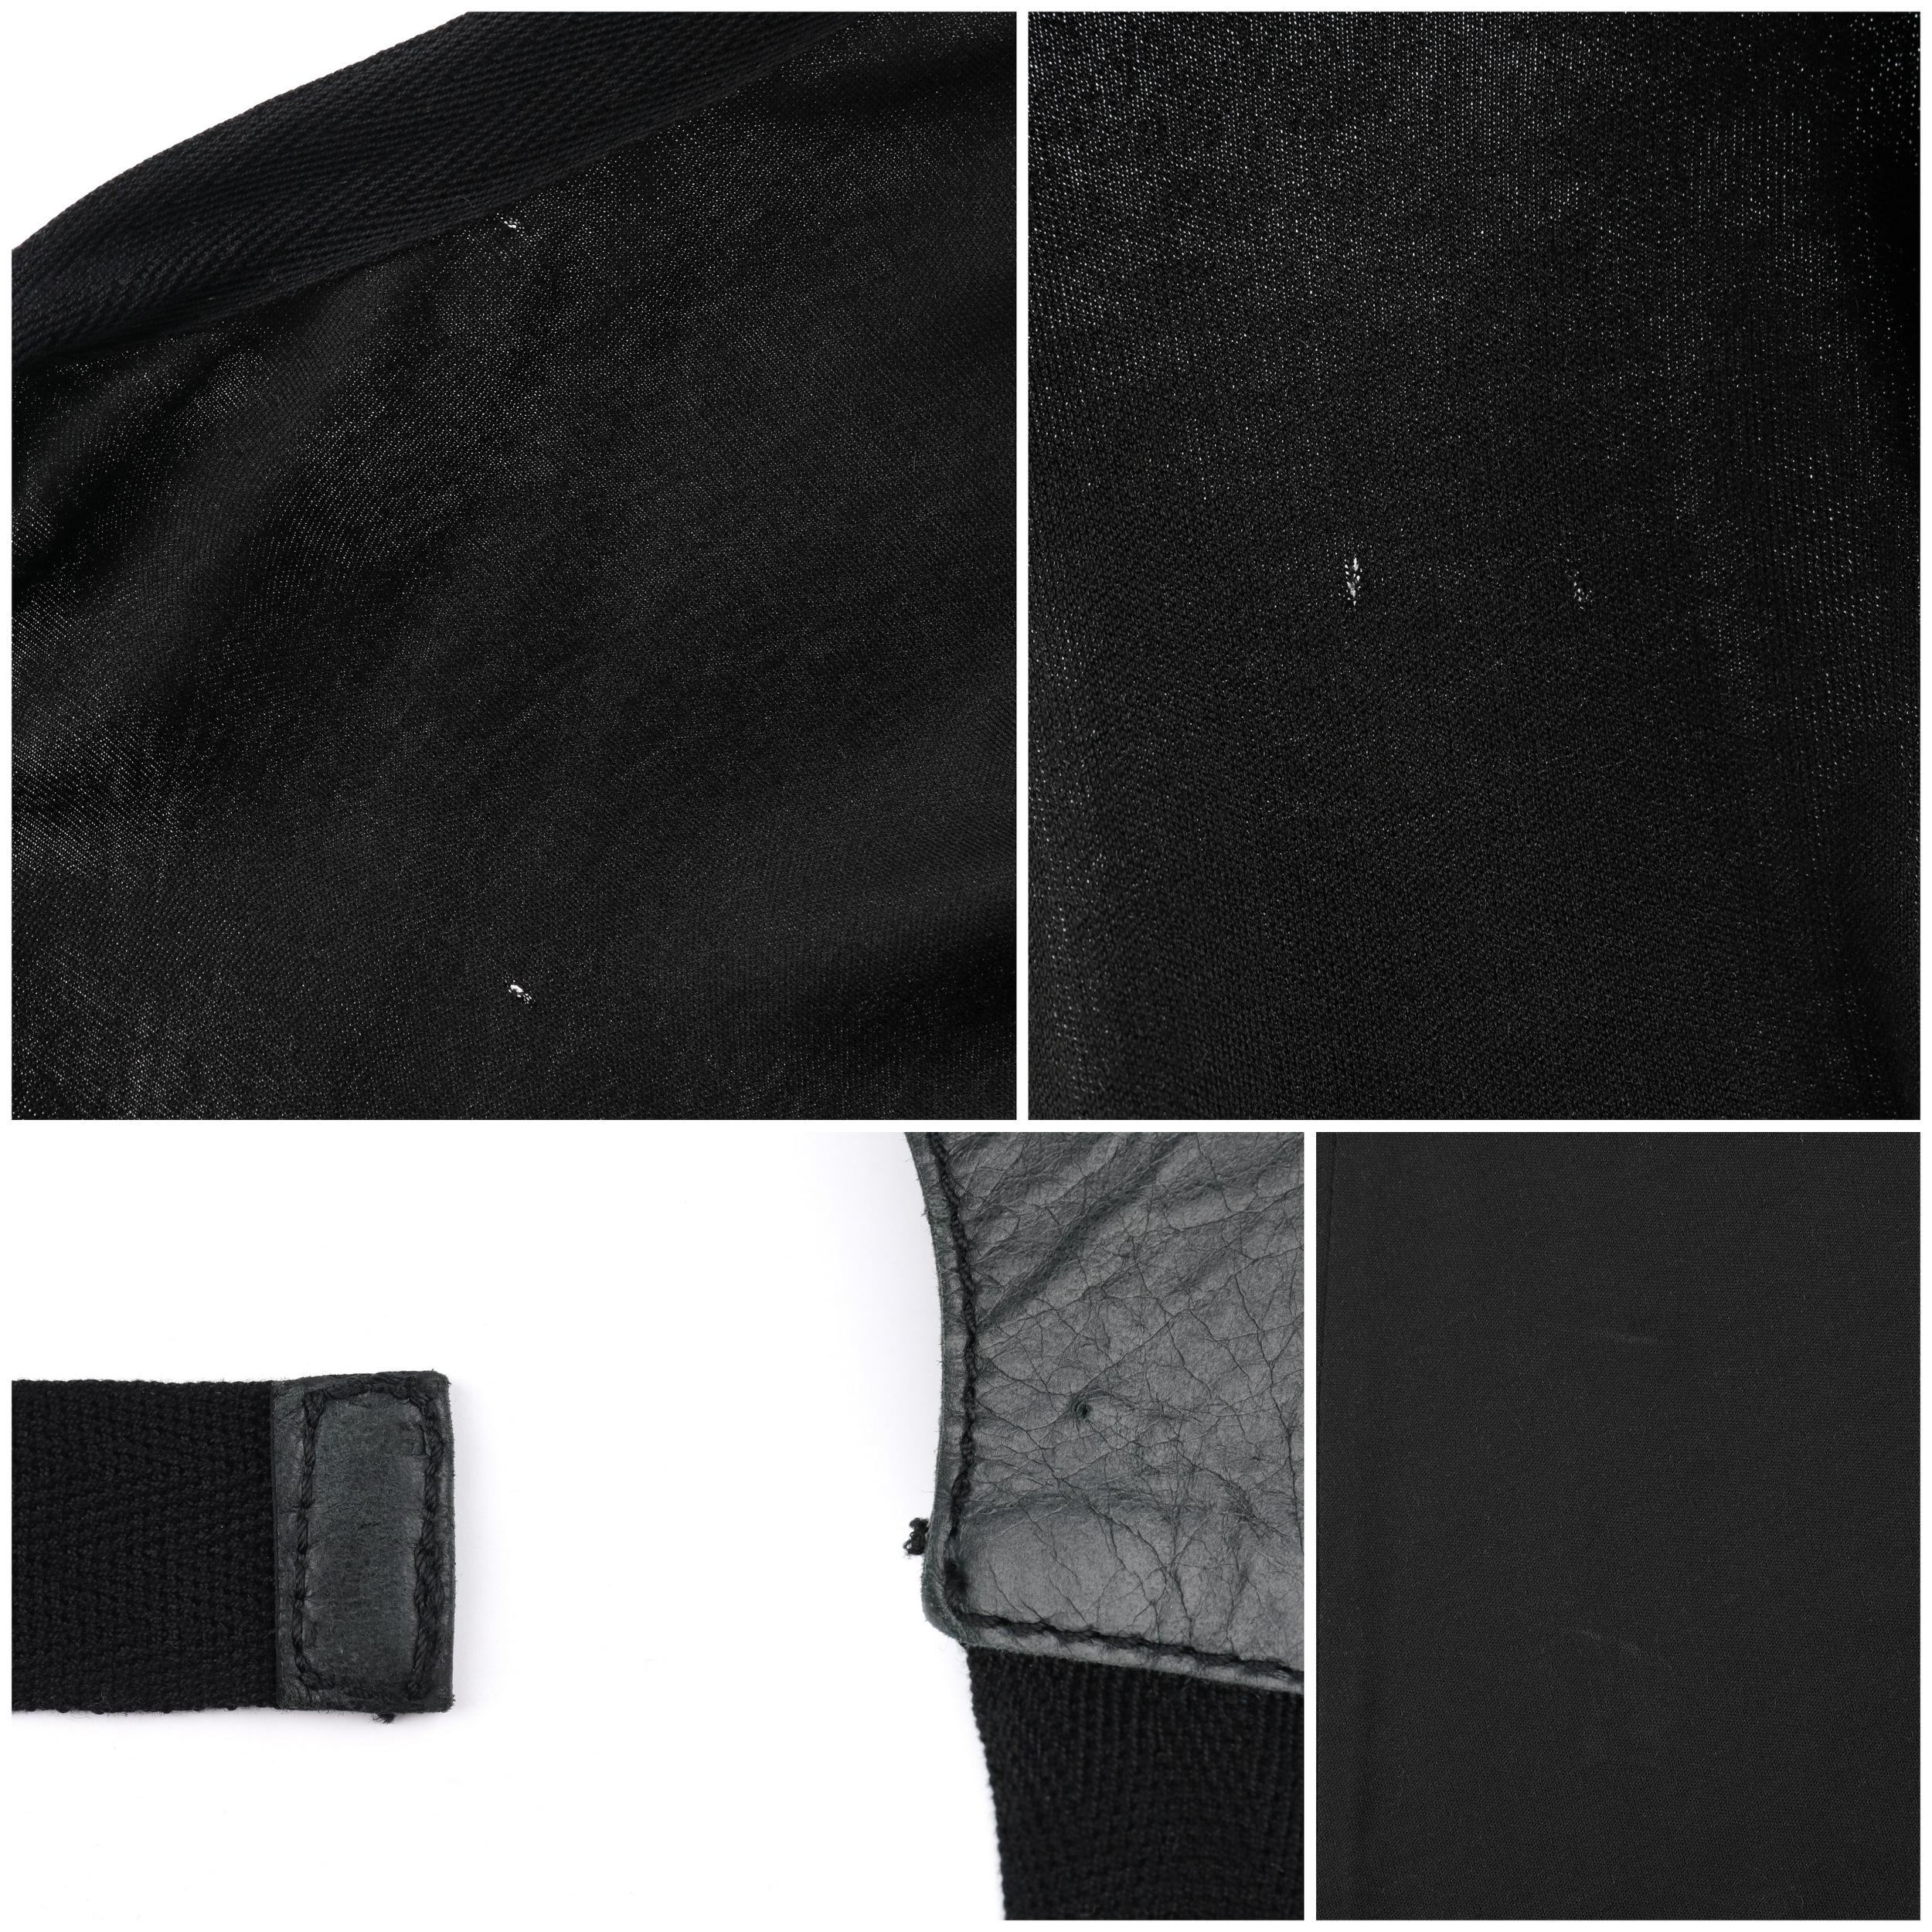 ALEXANDER McQUEEN S/S 2003 “Irere” Black One Shoulder Leather Buckle Strap Dress 2